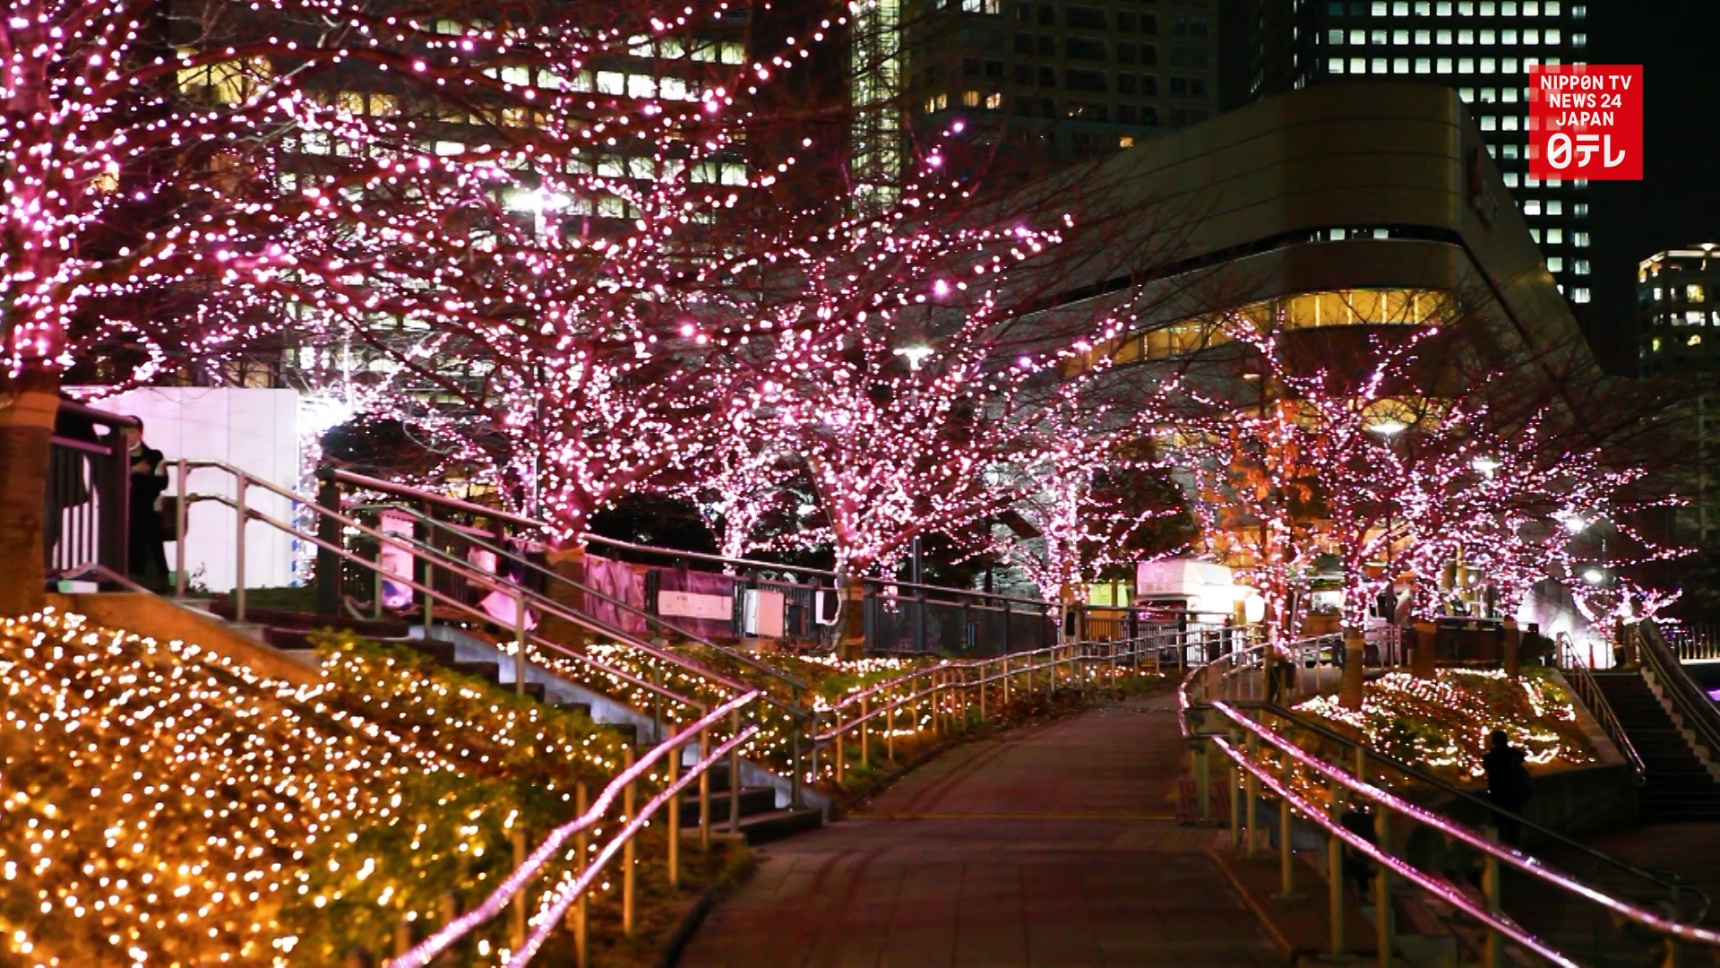 Waste Oil Helps Illuminate Tokyo in Winter